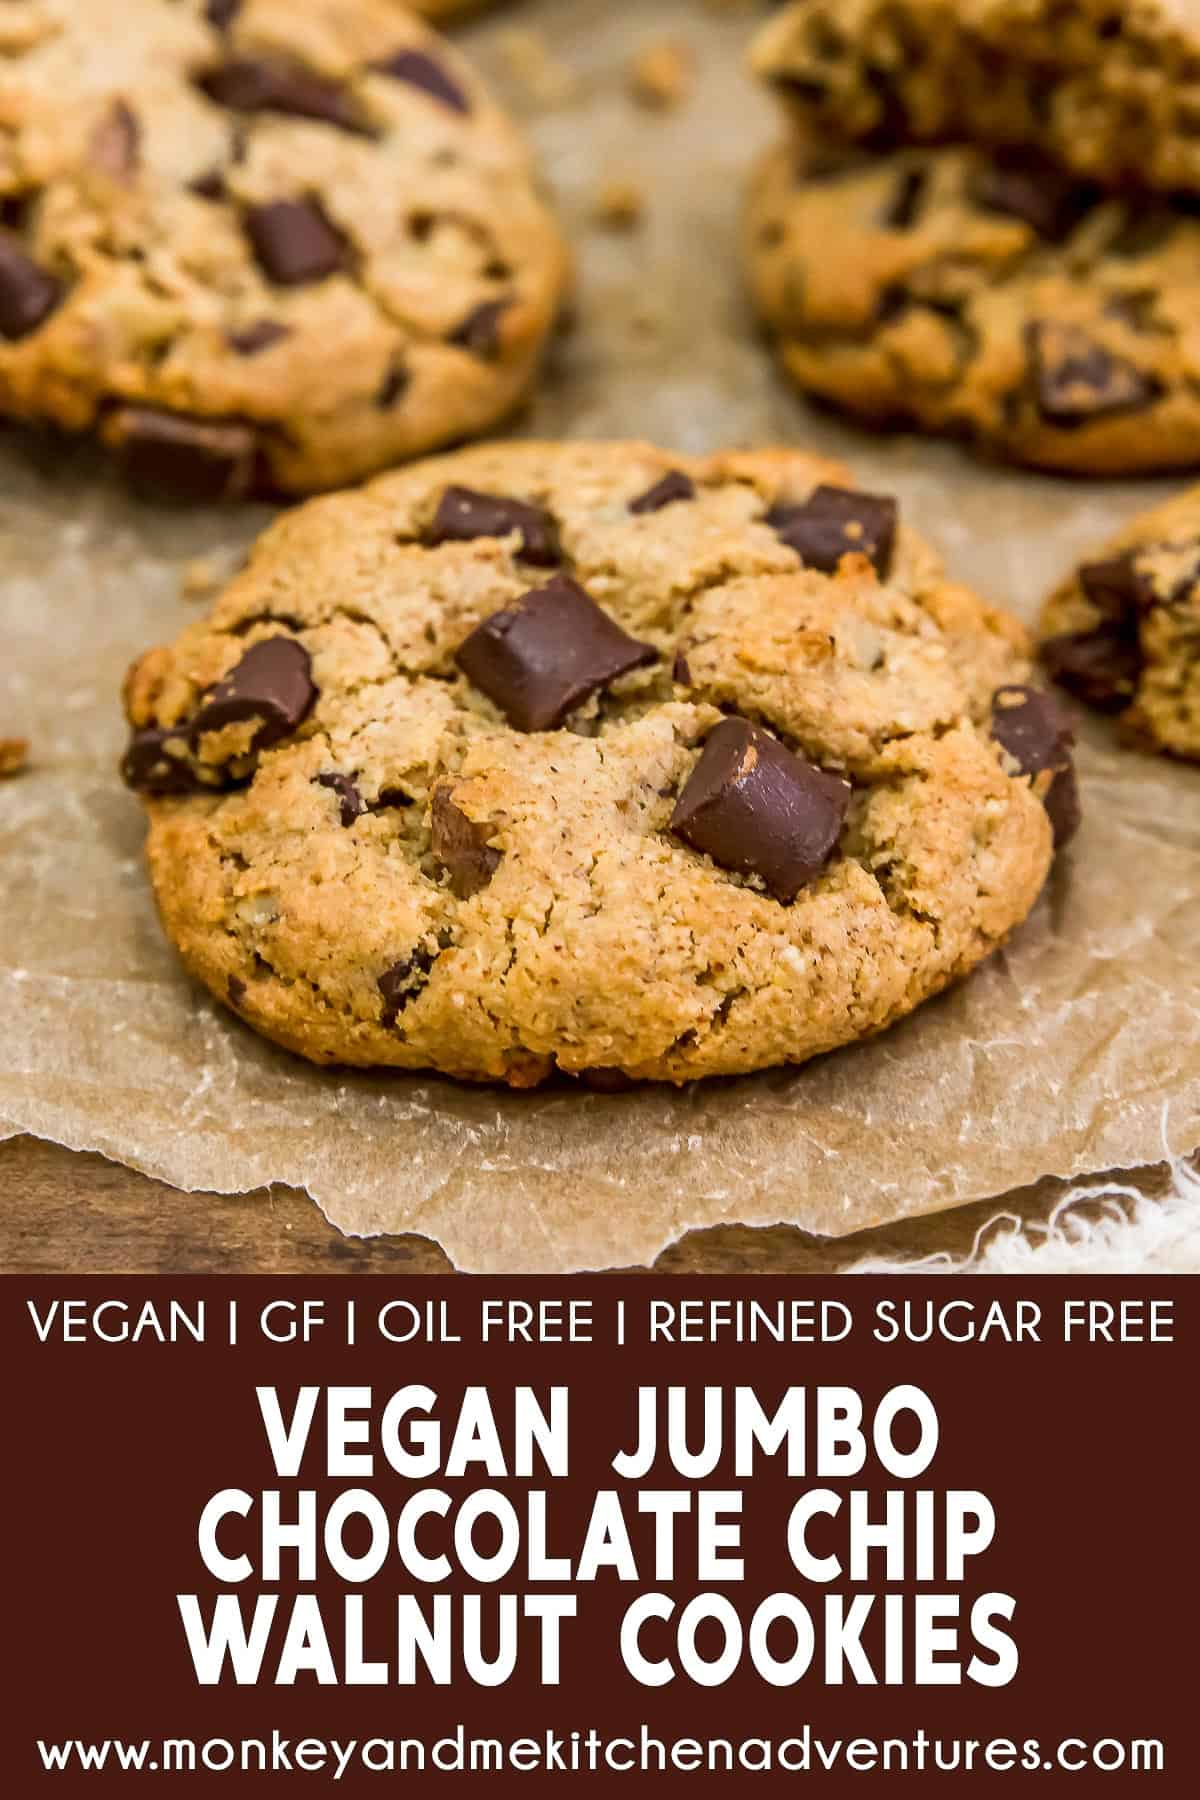 Vegan Jumbo Chocolate Chip Walnut Cookies with text description